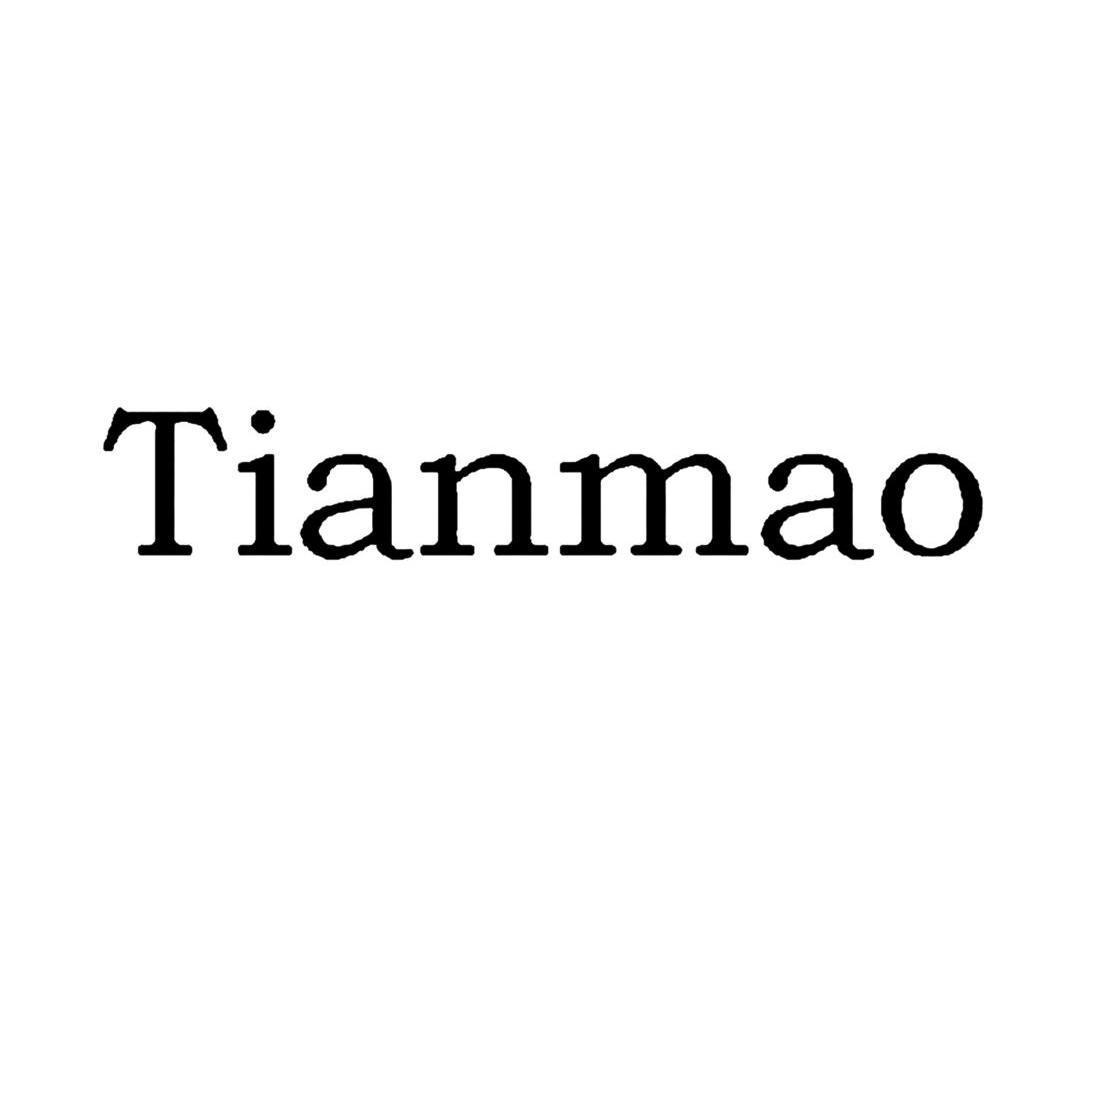 TIANMAO